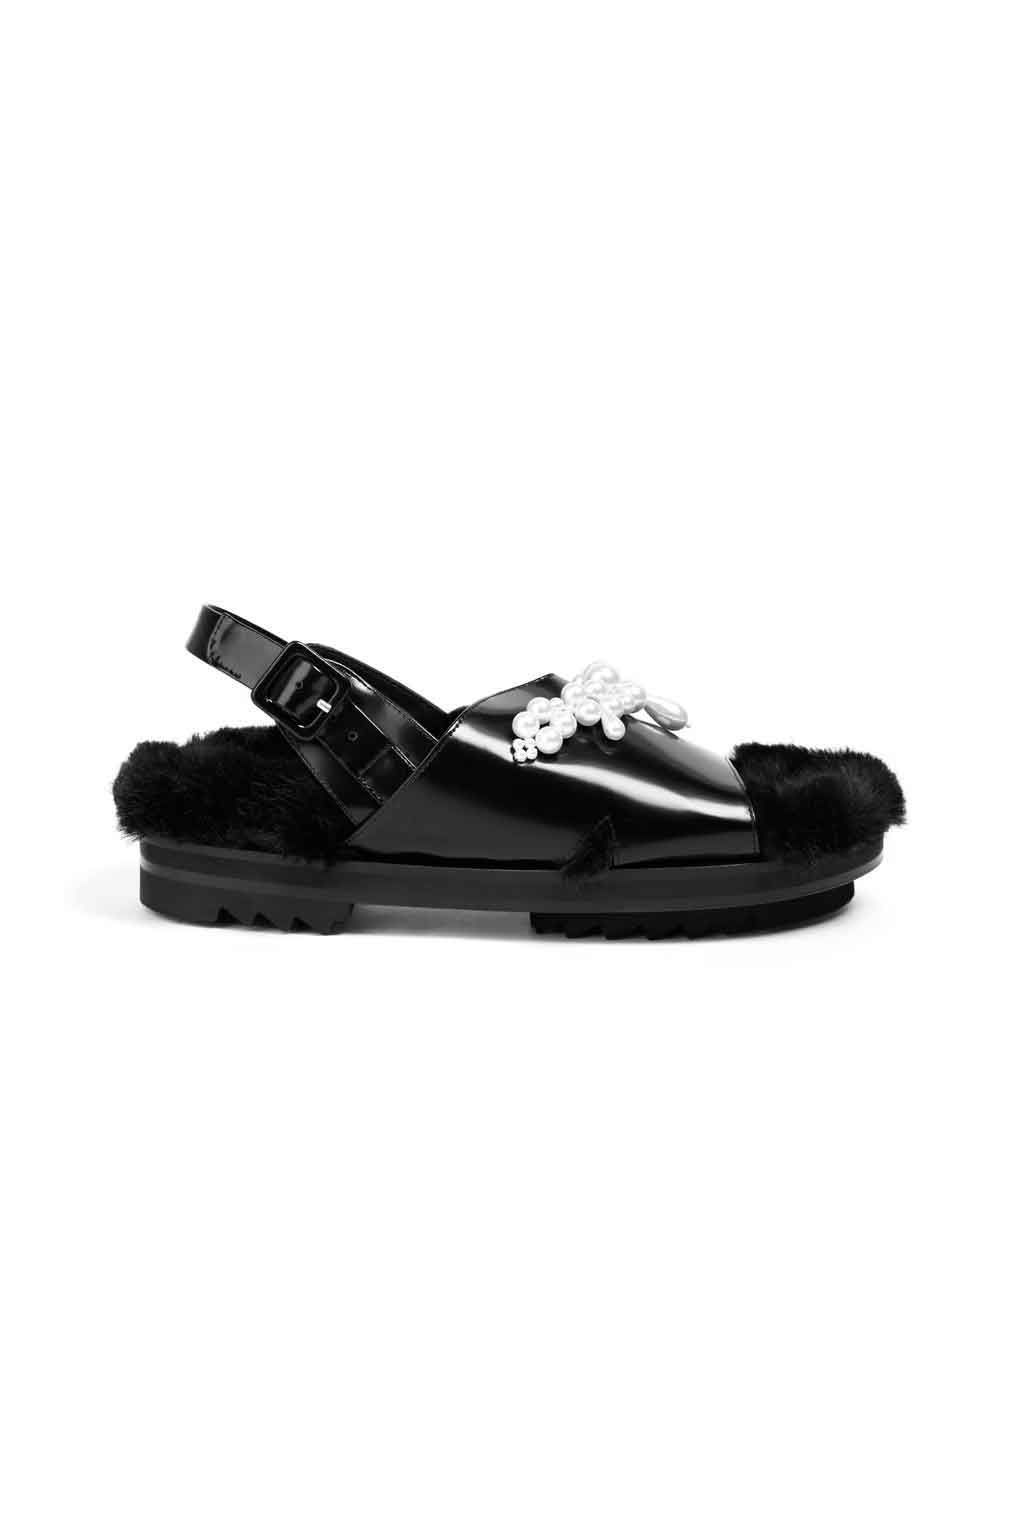 Buy Zori World Storm- Solid Black Faux Fur Sandals Online